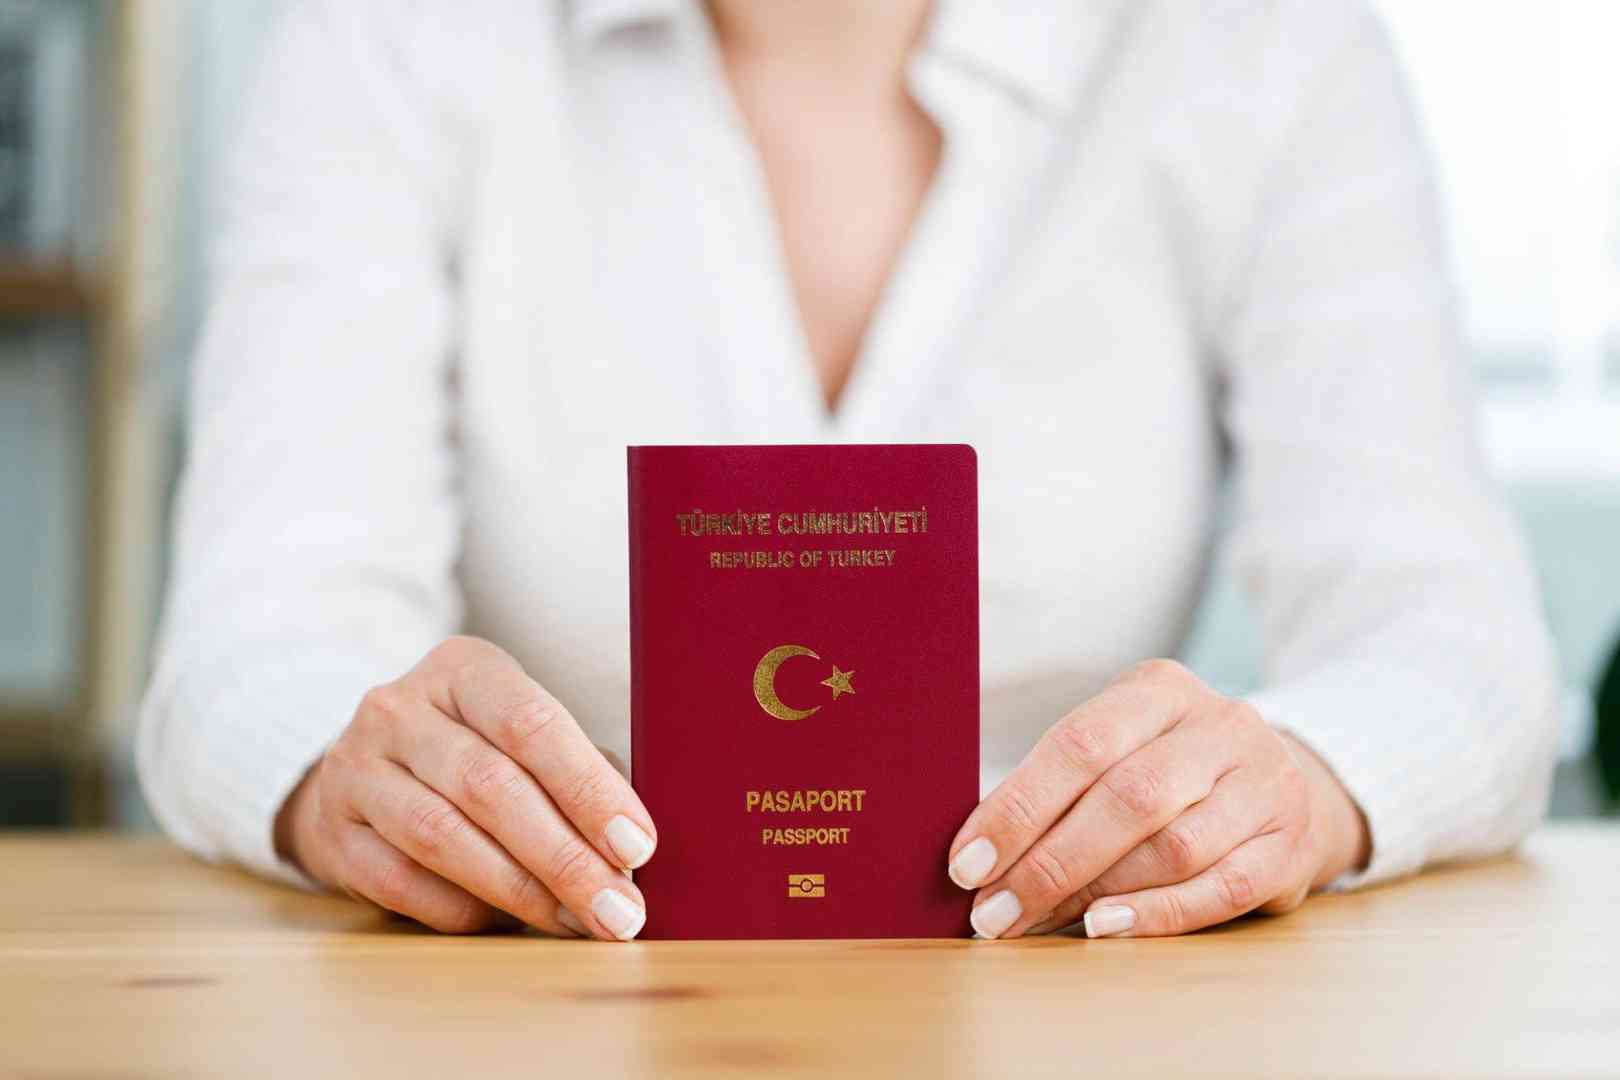 Obtain Turkish citizenship